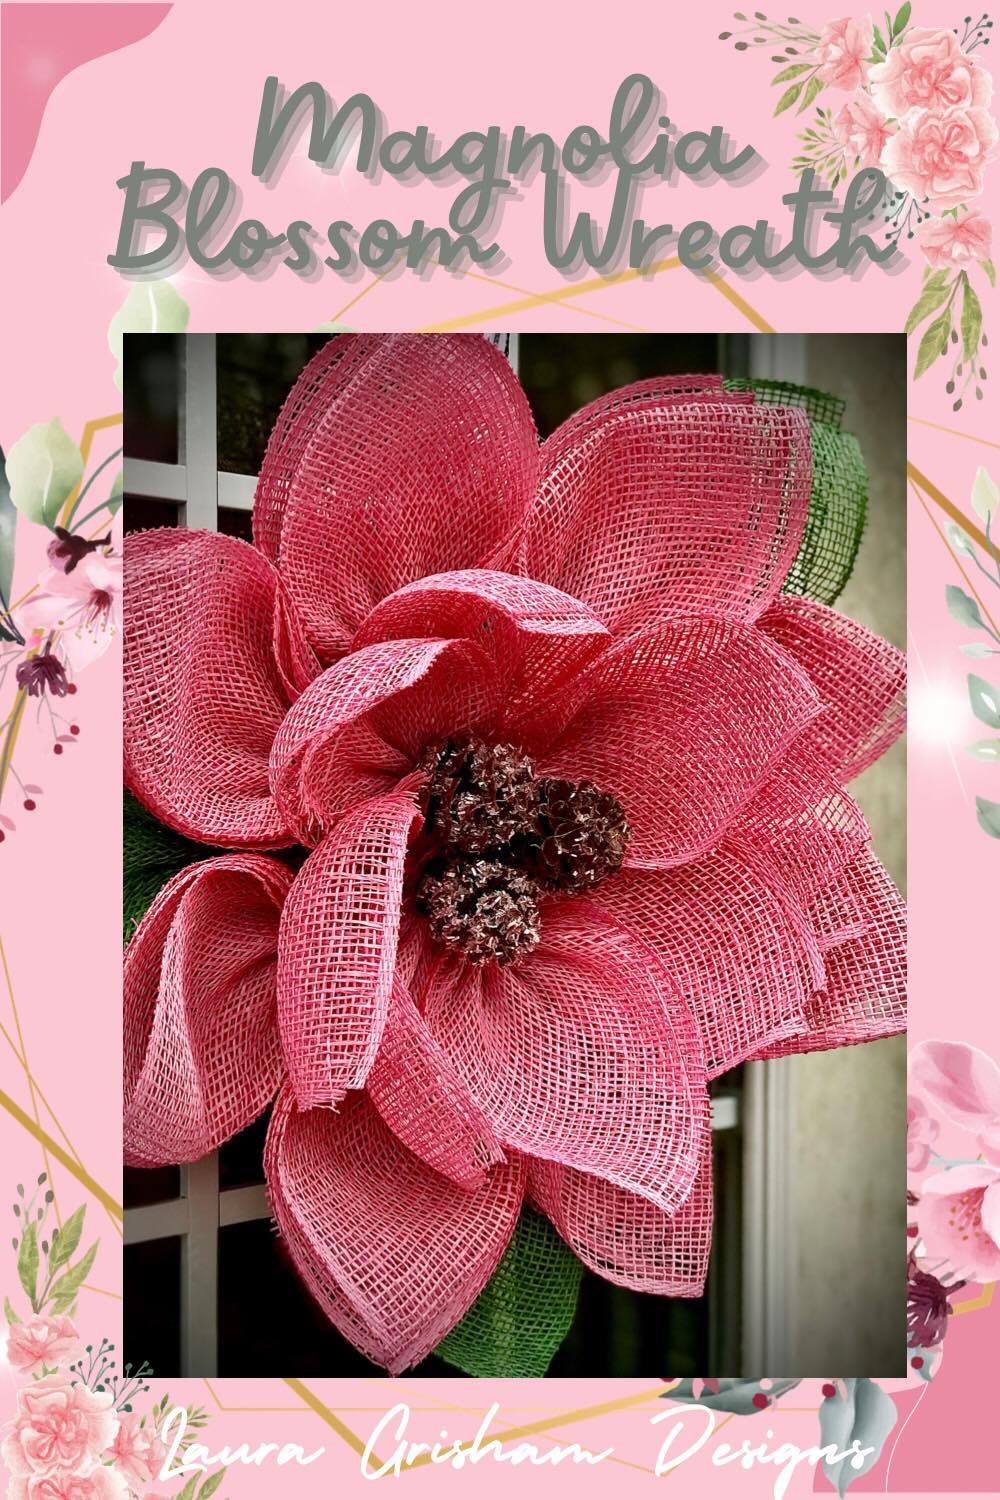 Magnolia Wreath Watercolor Pillow Cover – Returning Grace Designs